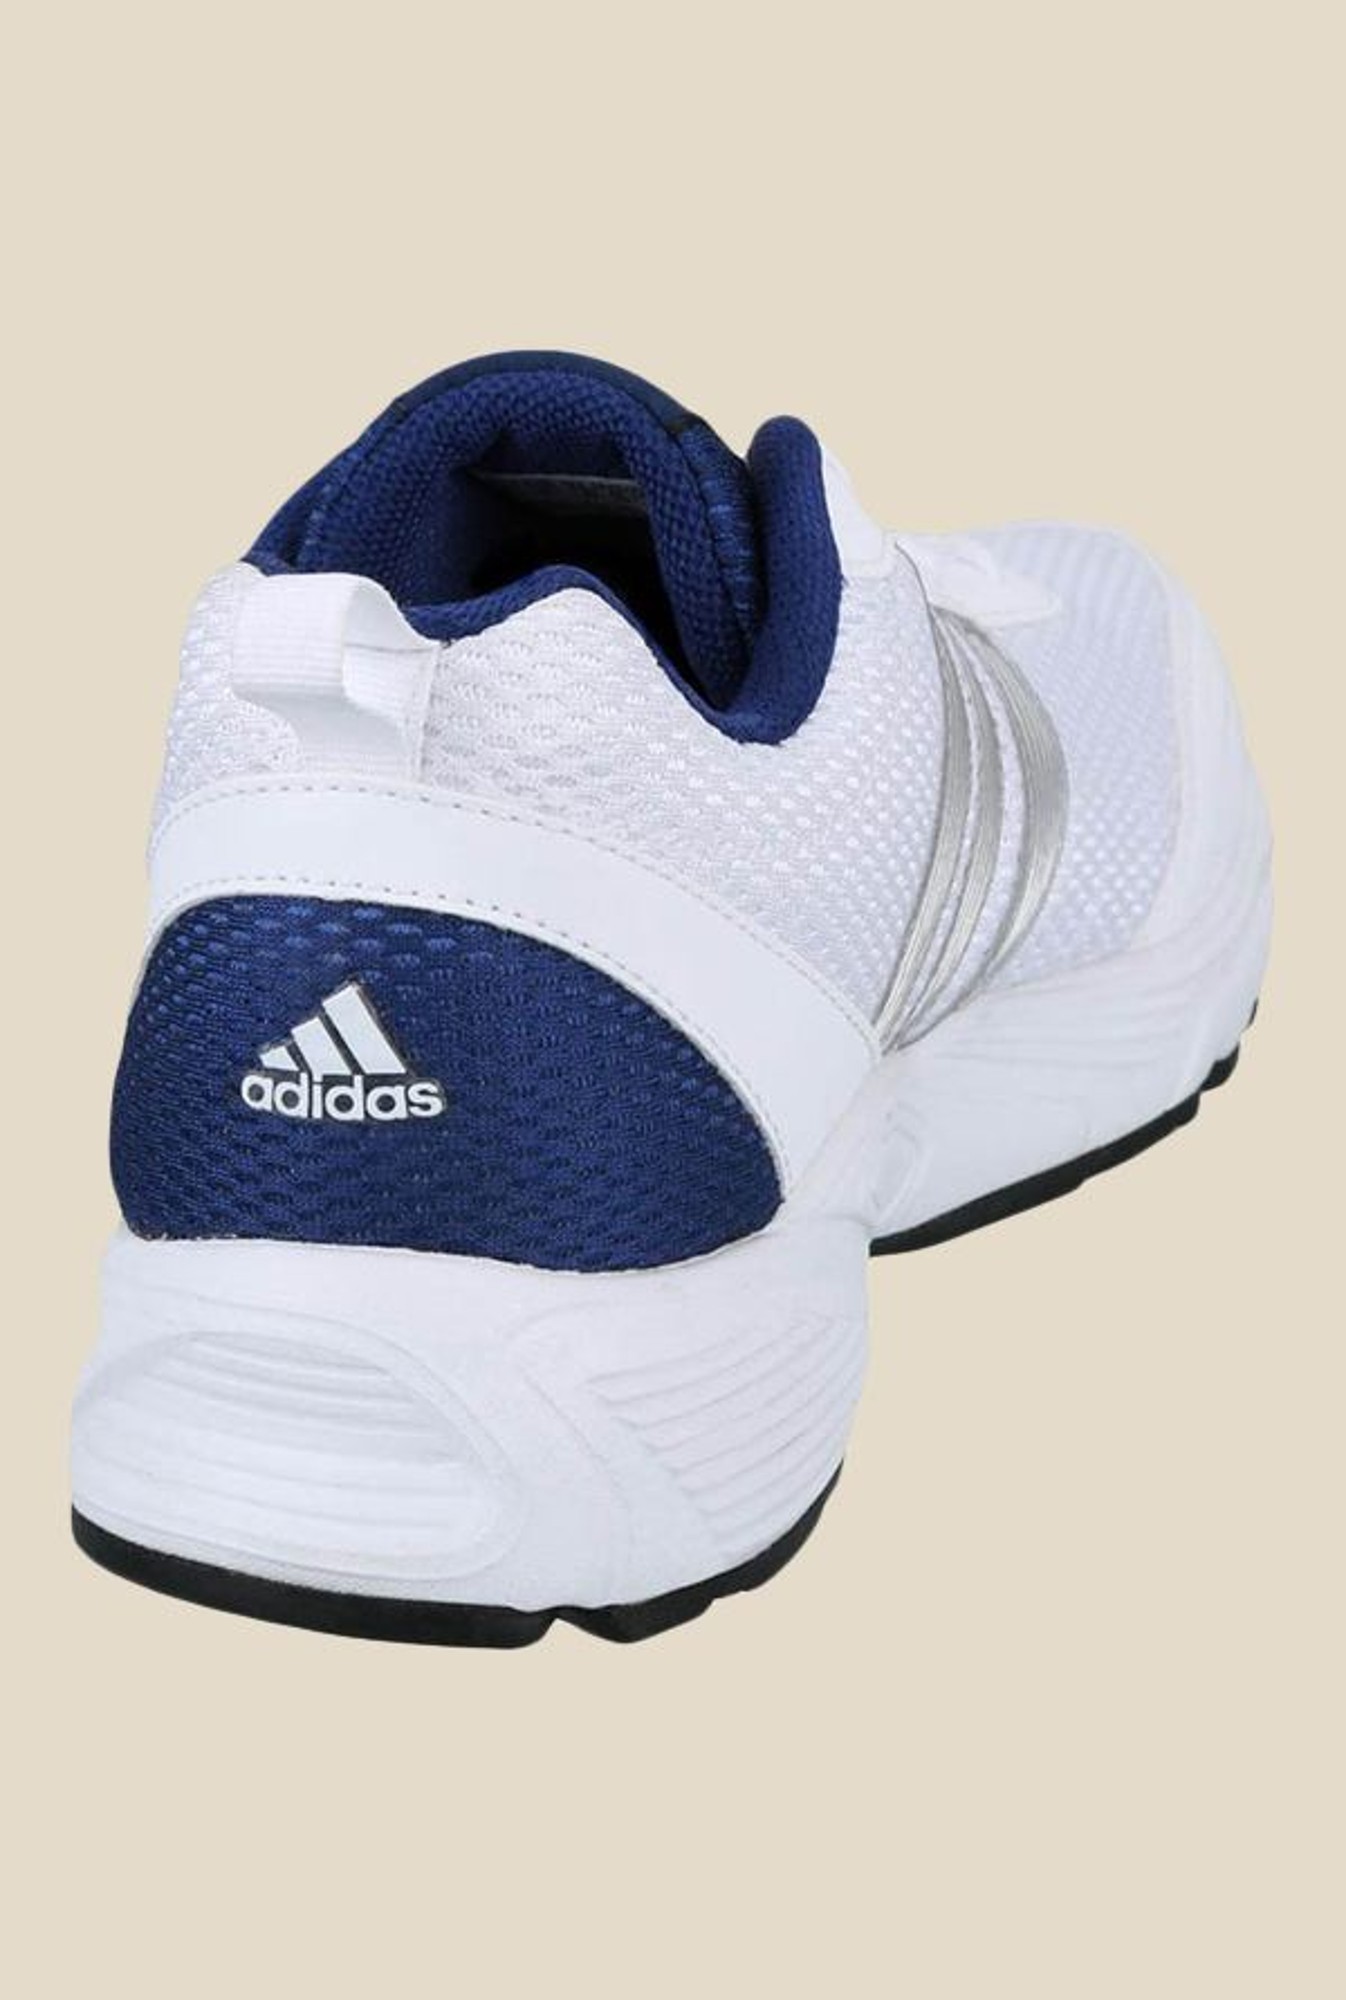 Buy Adidas Albis 1.0 White \u0026 Navy 